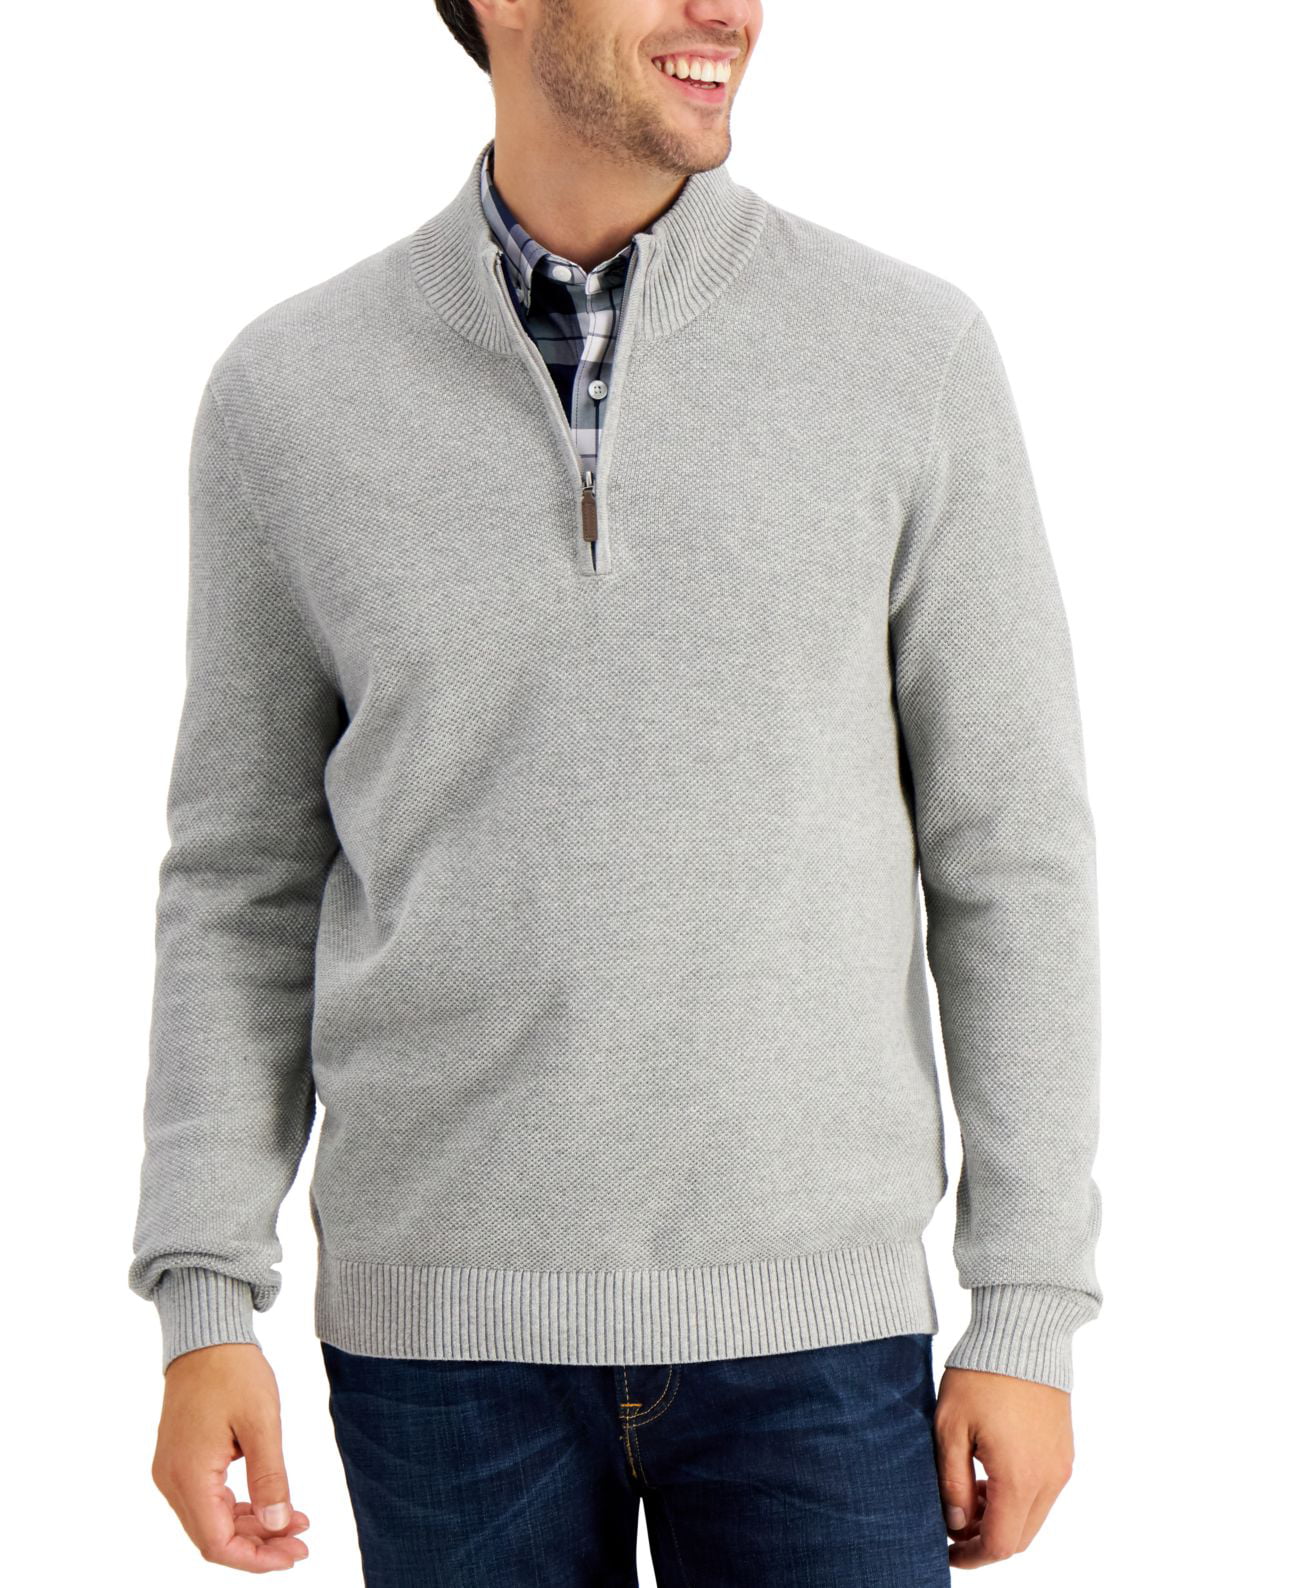 Club Room Men’s Quarter-Zip Textured Cotton Sweater, Gray, Small